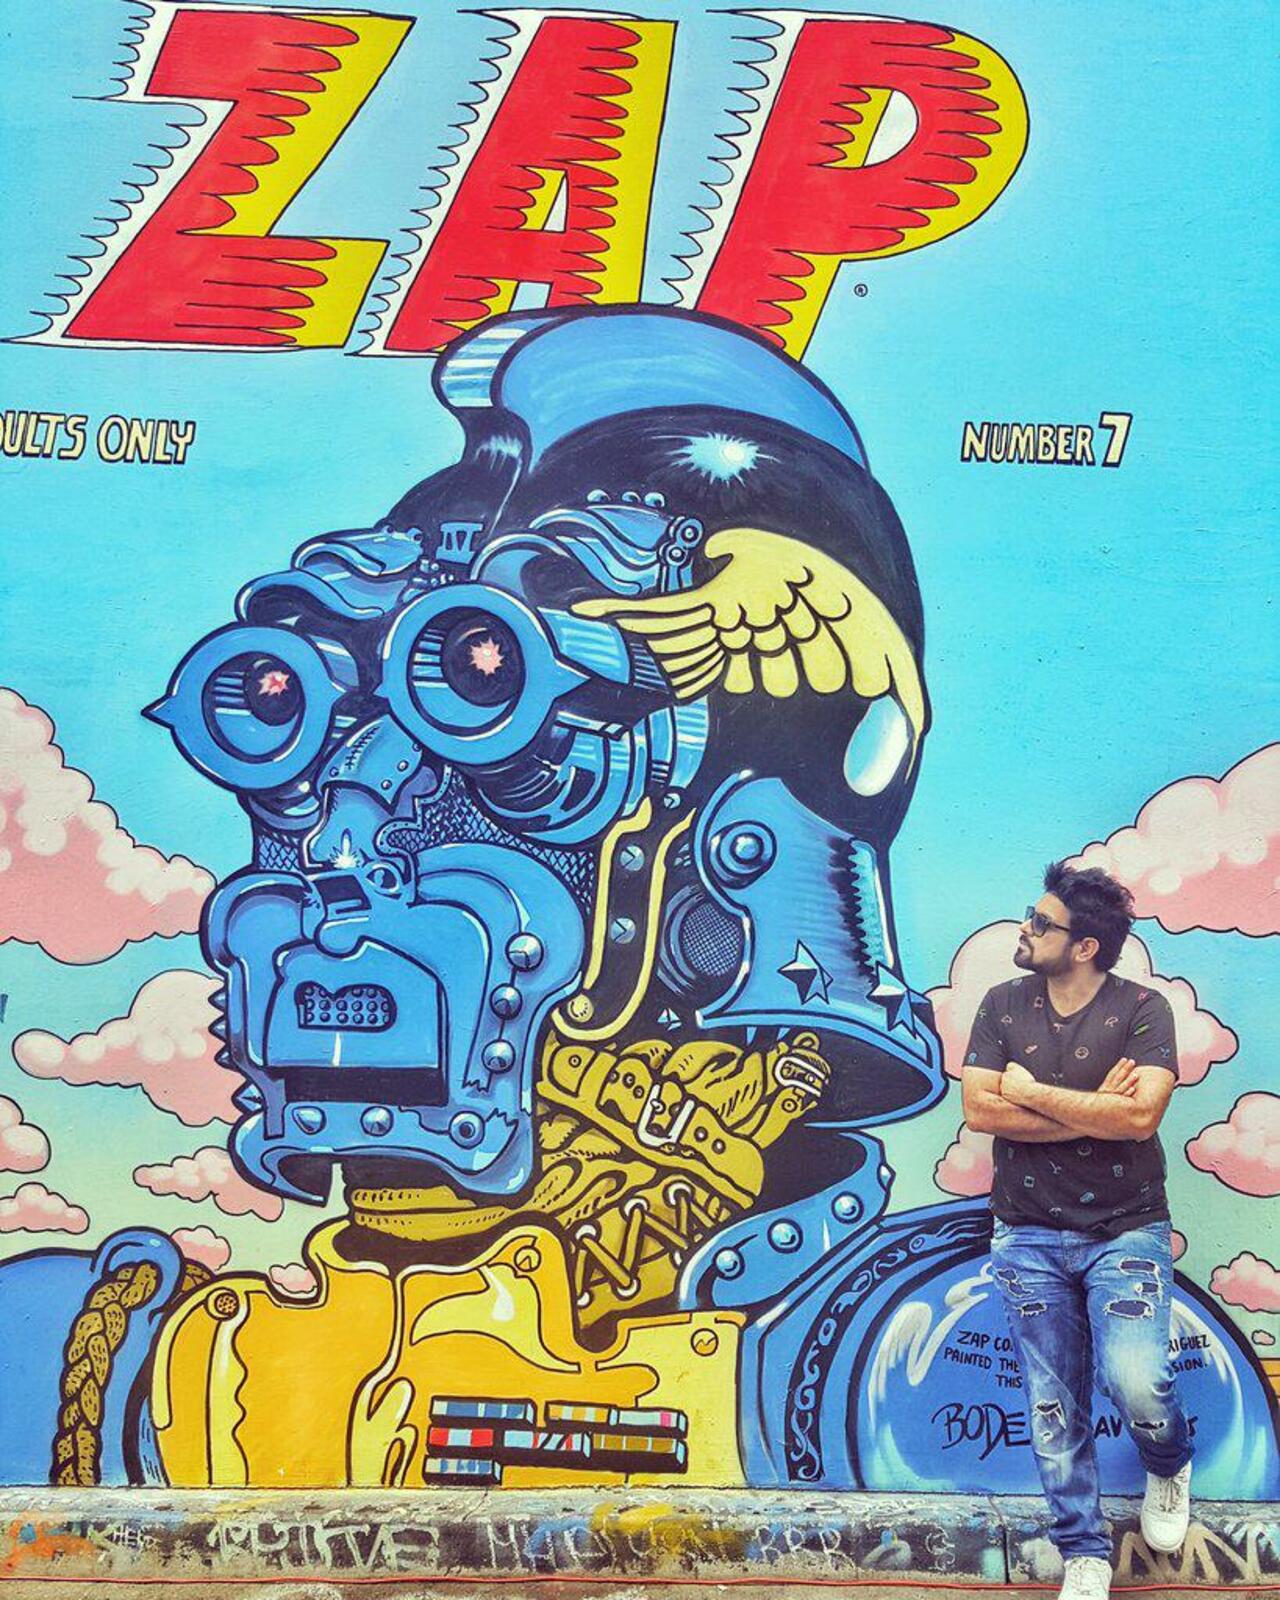 Zip zap zooming across the streets of San Francisco. 
#SanFransisco #Graffiti #StreetArt #Wanderlust http://t.co/4AMDXt053c